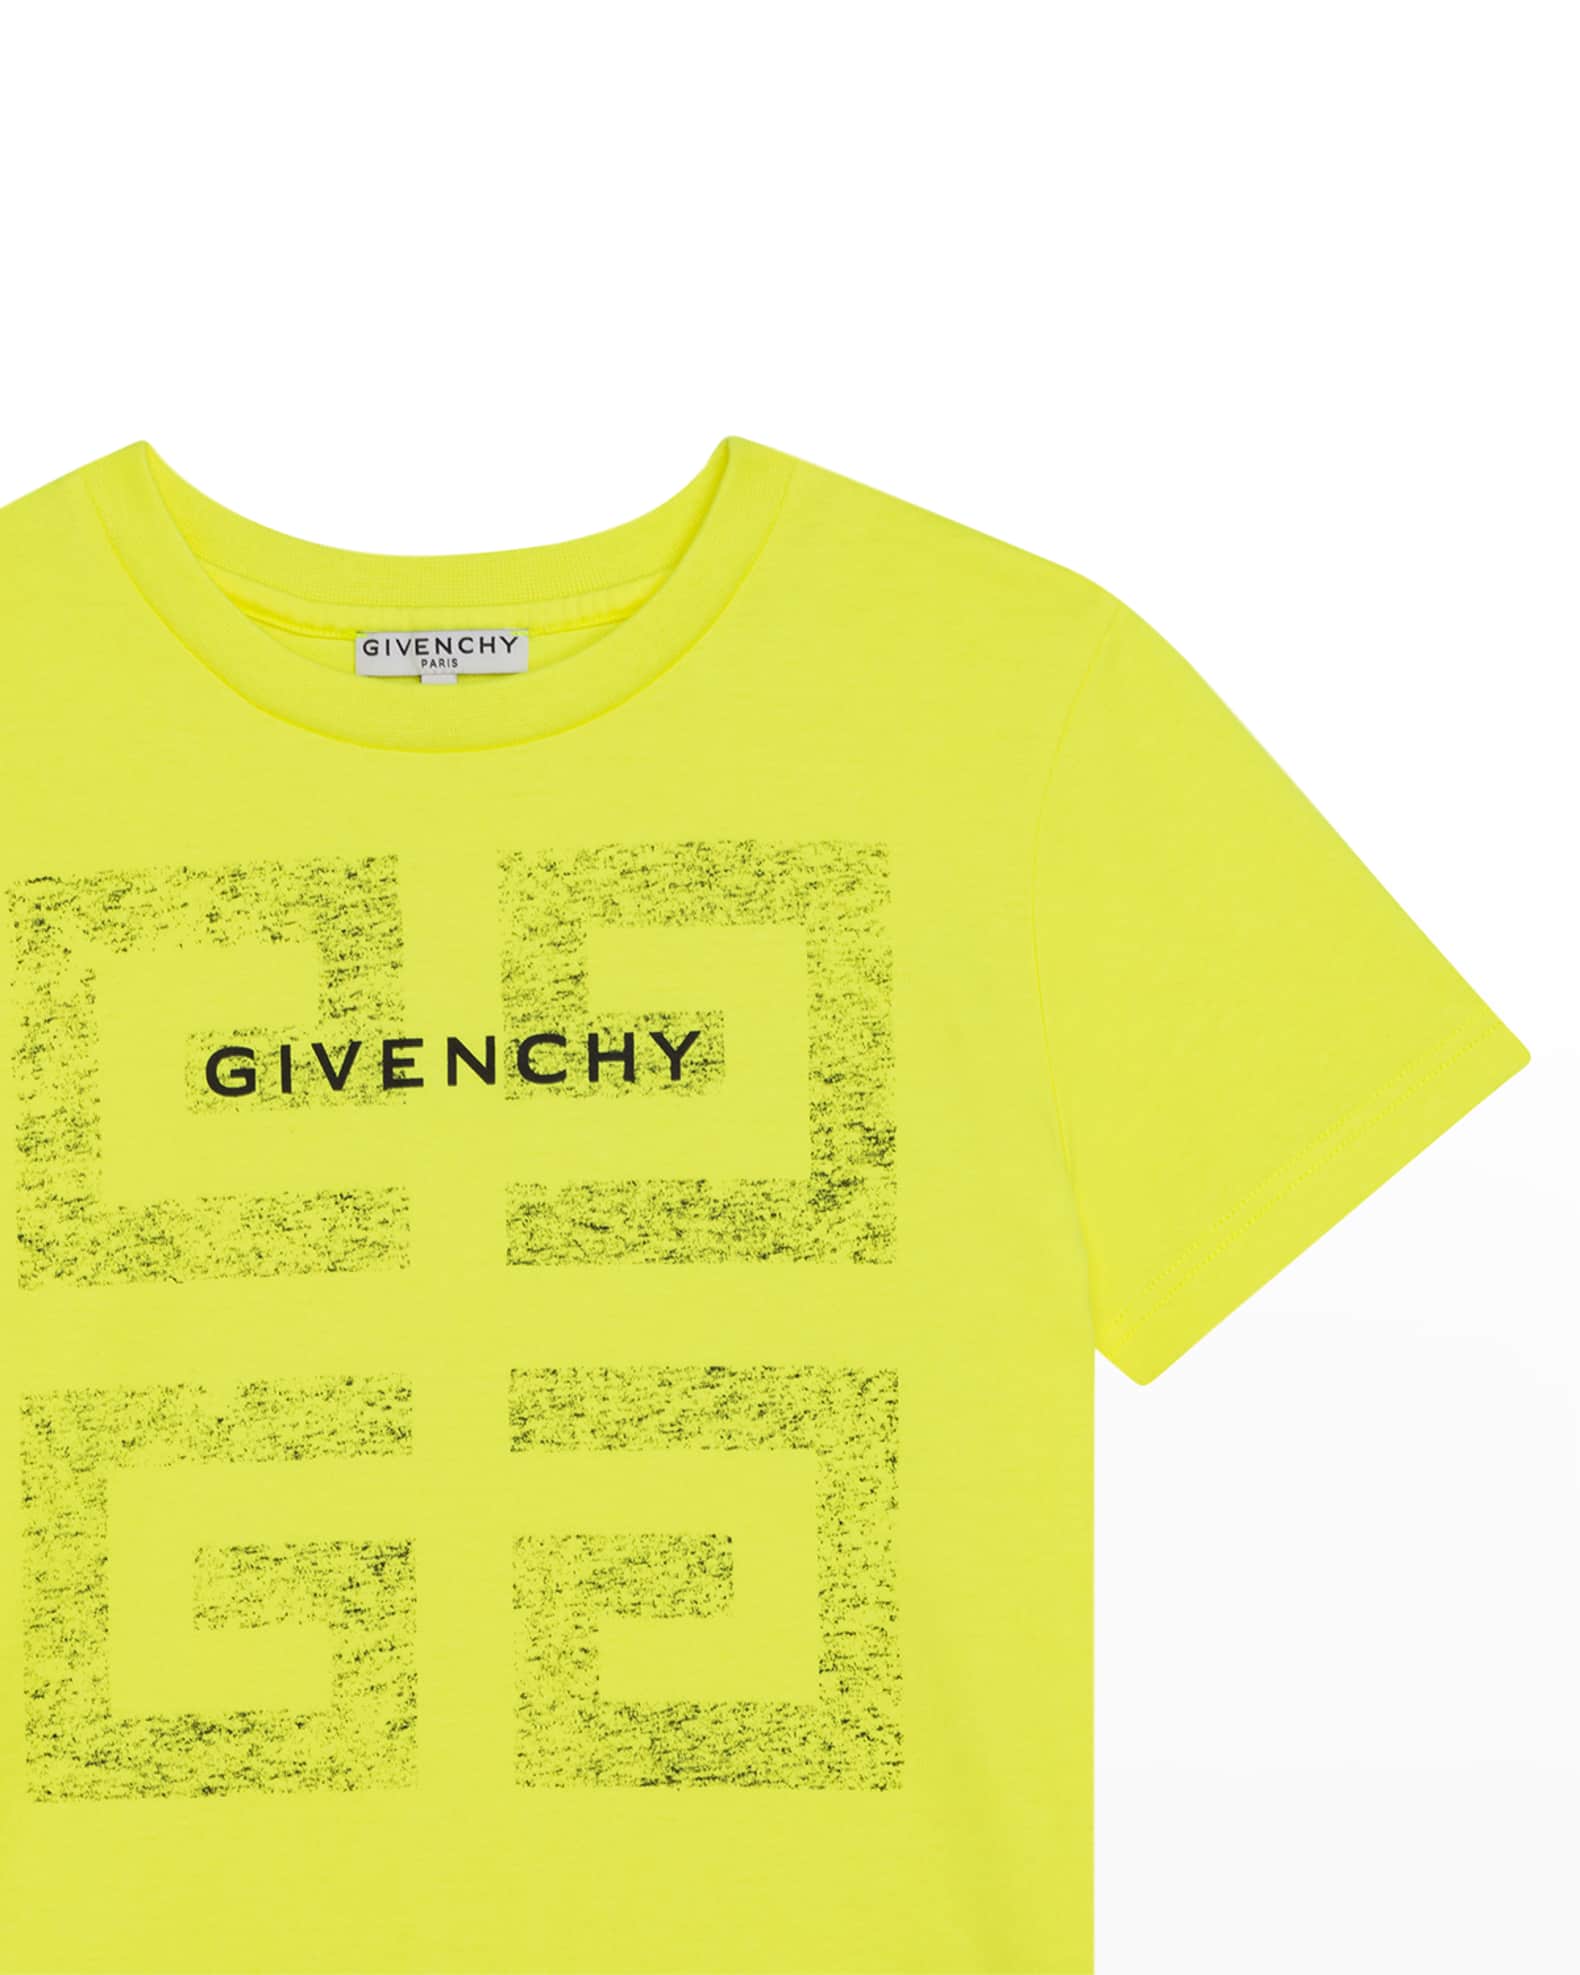 Givenchy size 4 Boys T shirt